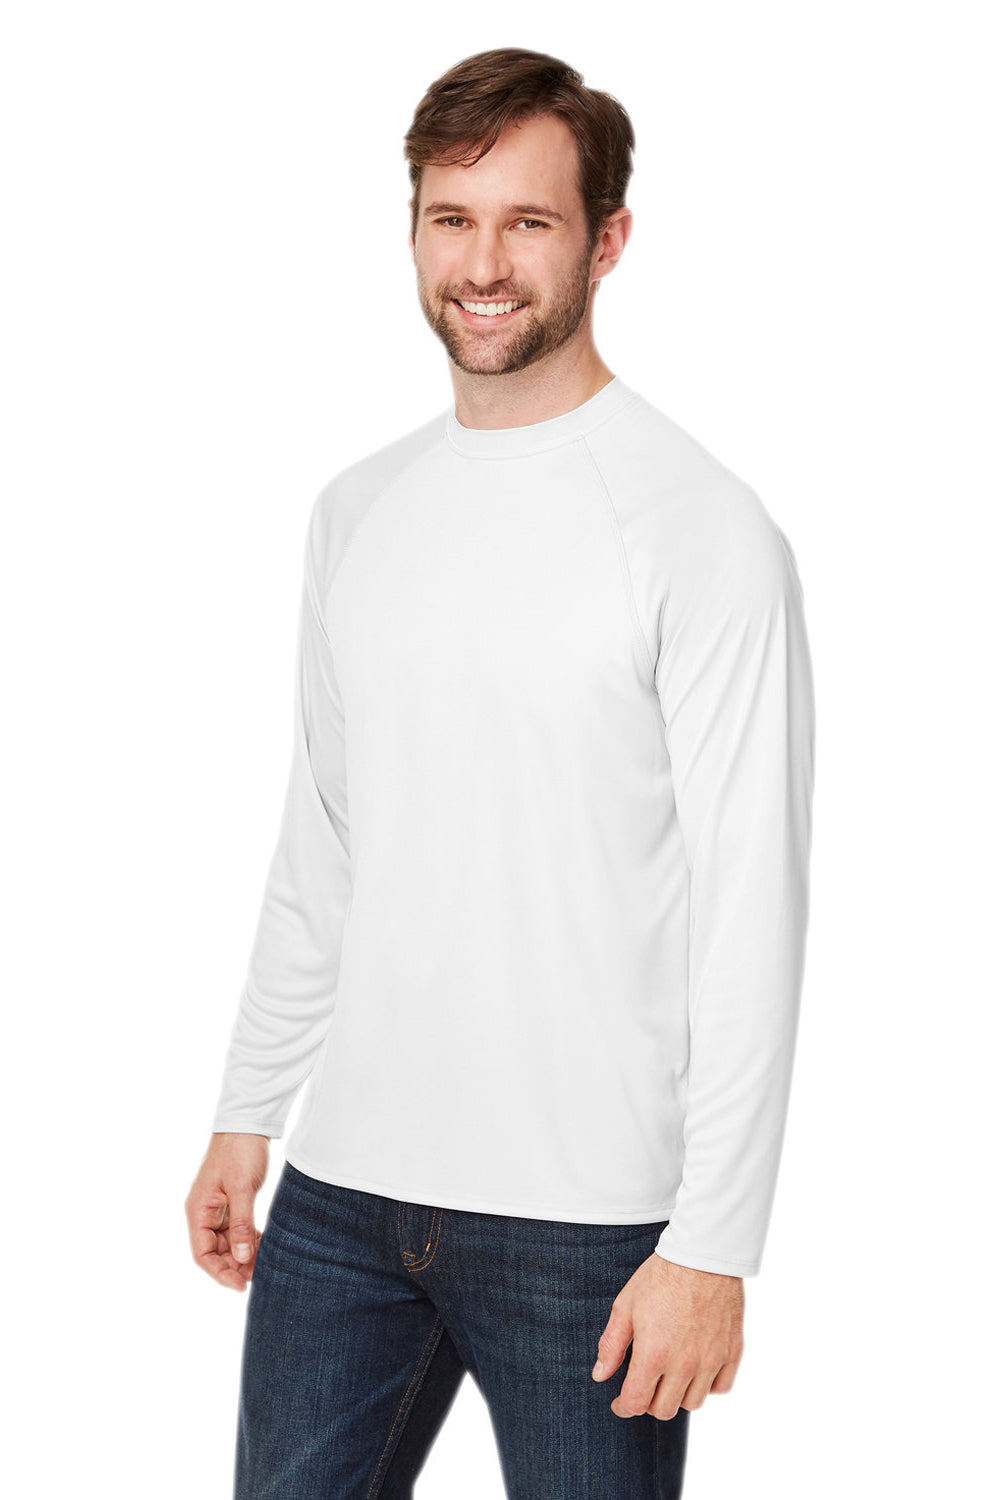 Core 365 CE110 Mens Ultra MVP Raglan Long Sleeve T-Shirt White 3Q